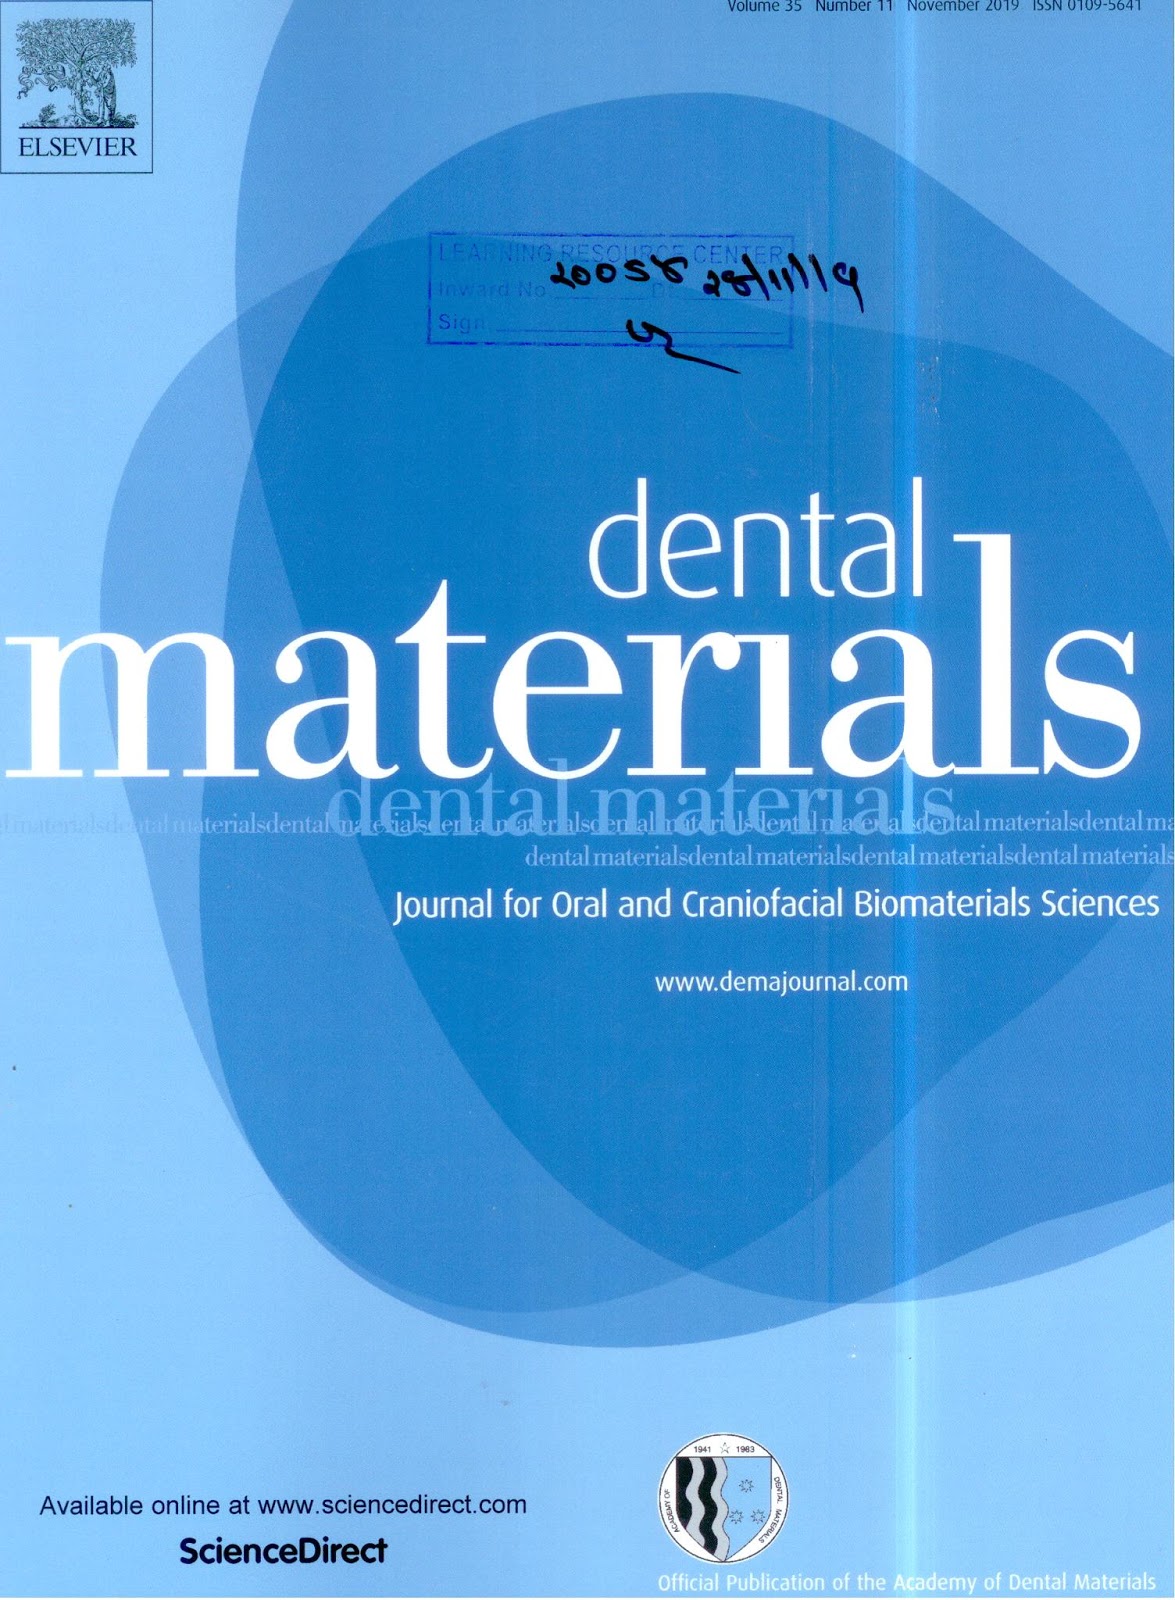 https://www.sciencedirect.com/journal/dental-materials/vol/35/issue/11